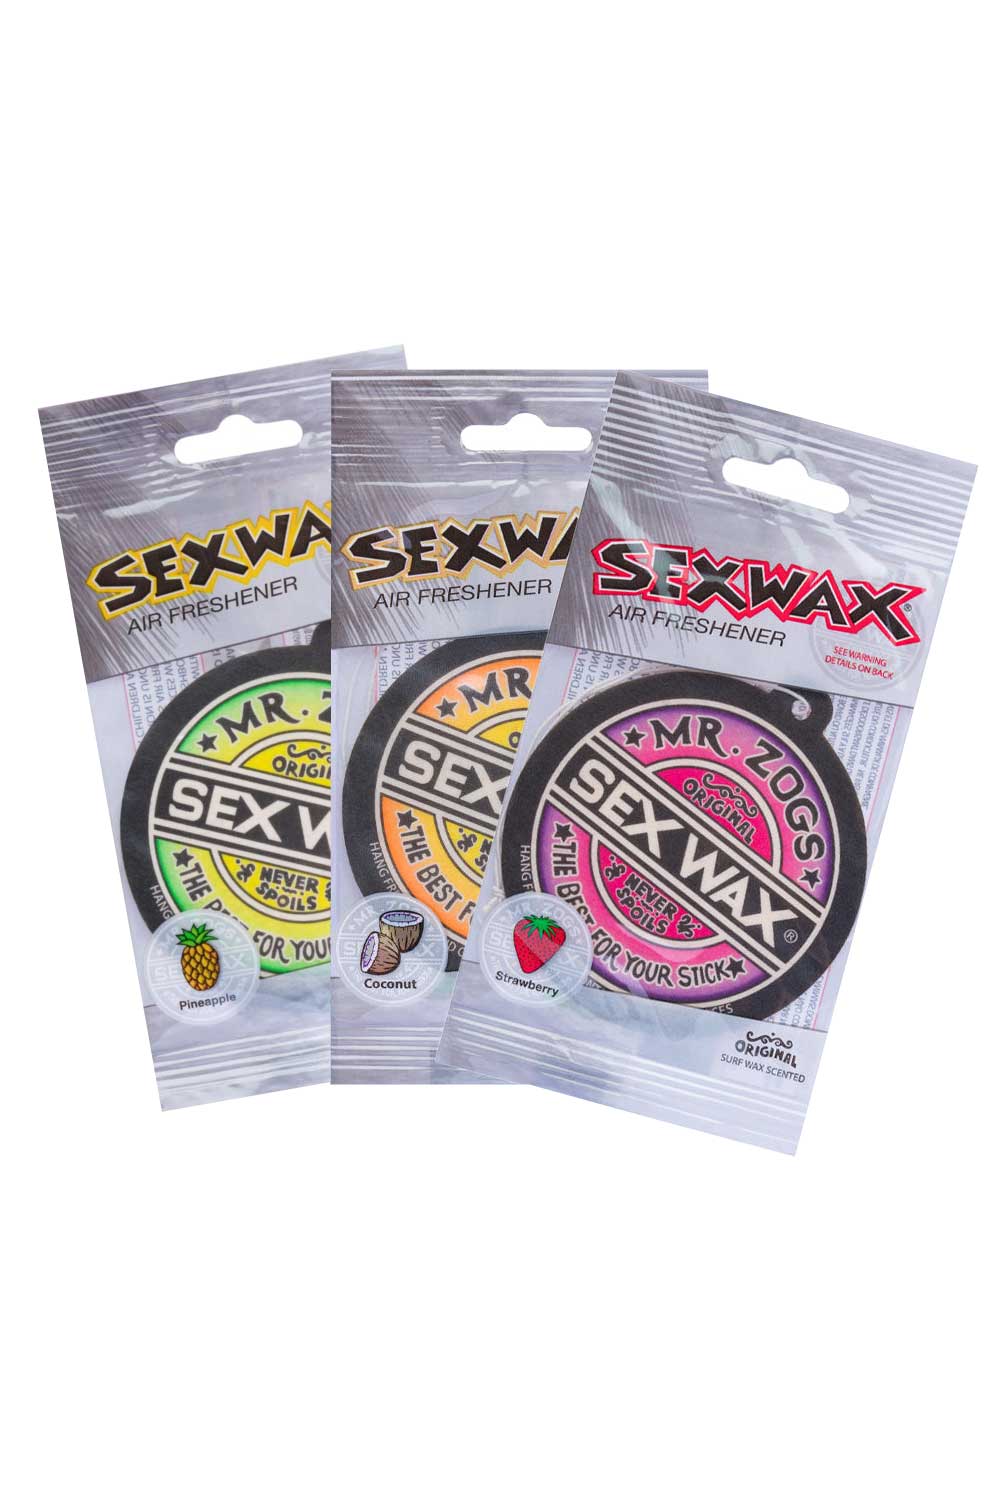 Sexwax Car Freshener Coconut Coconut, Buy Online